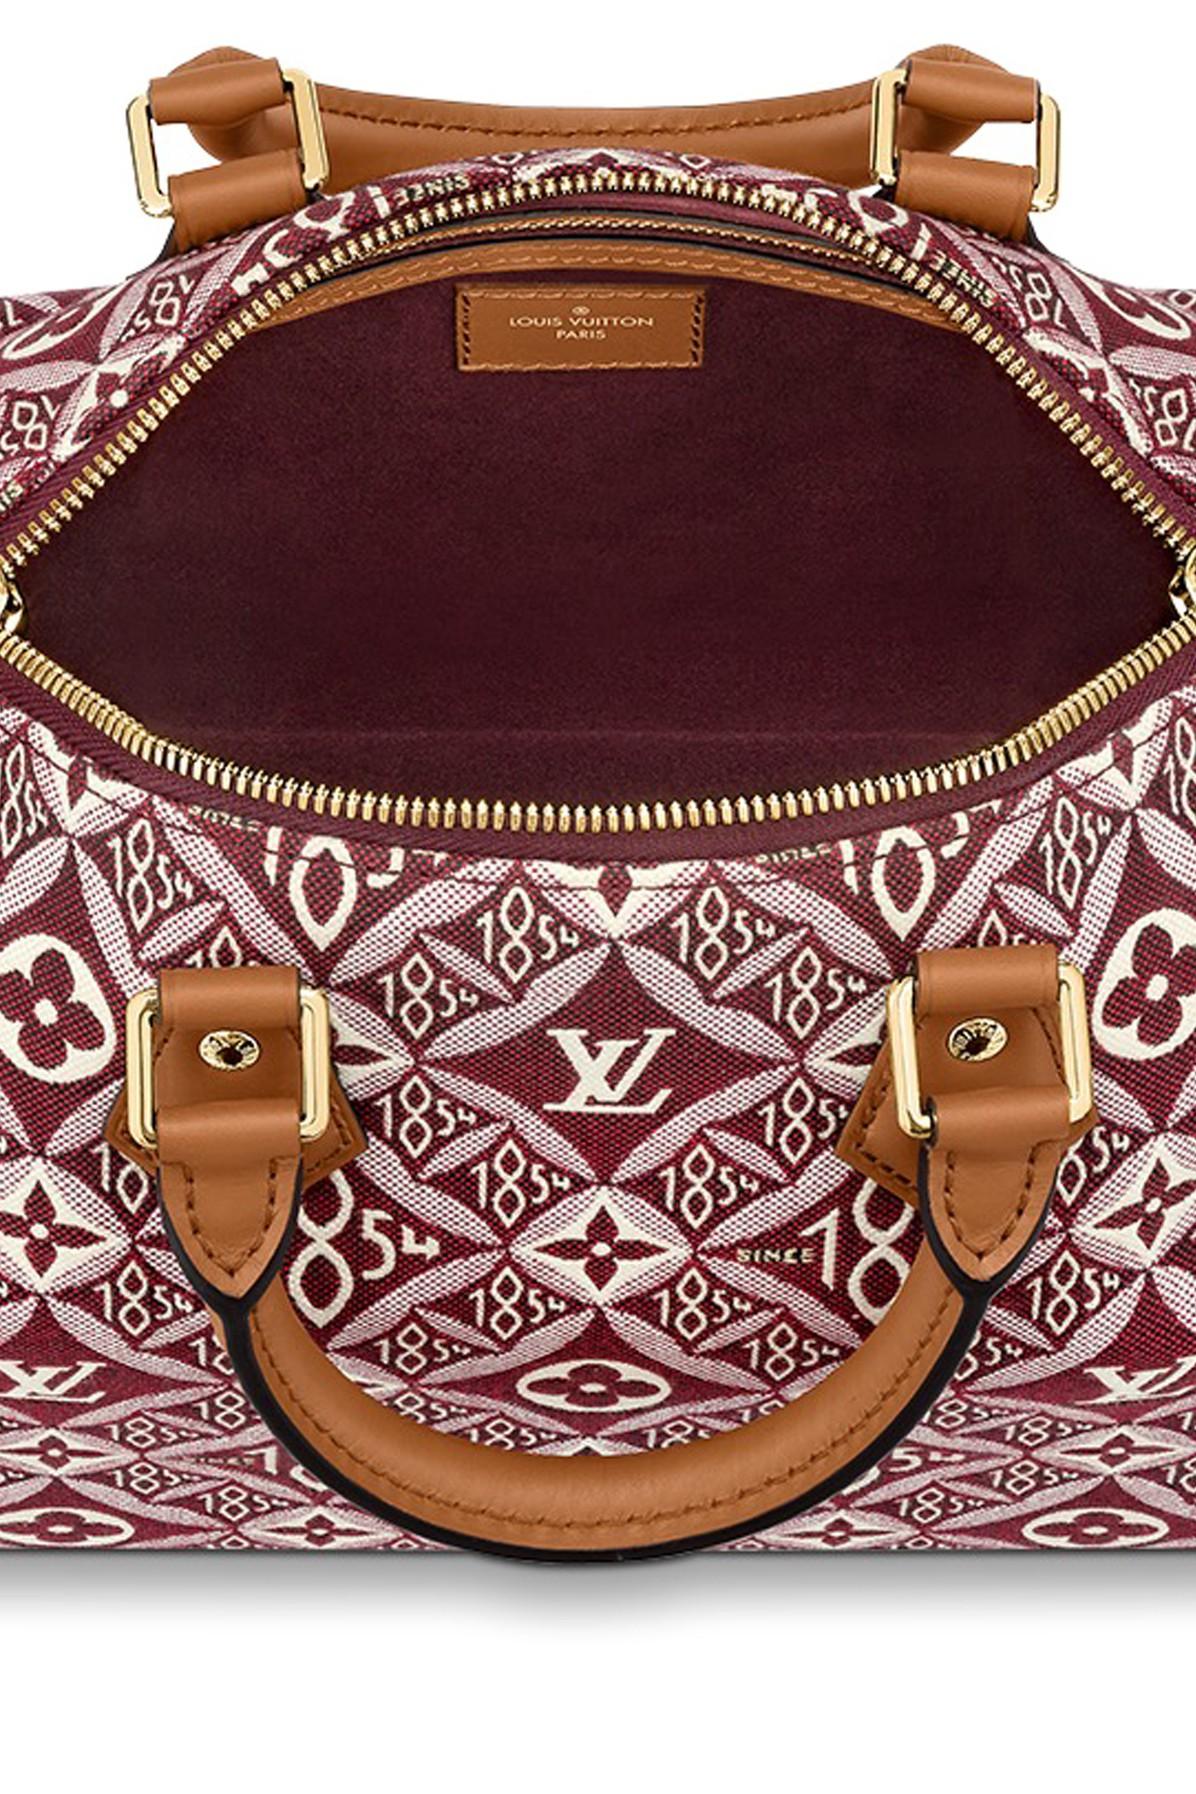 Louis Vuitton Speedy 25 – The Brand Collector